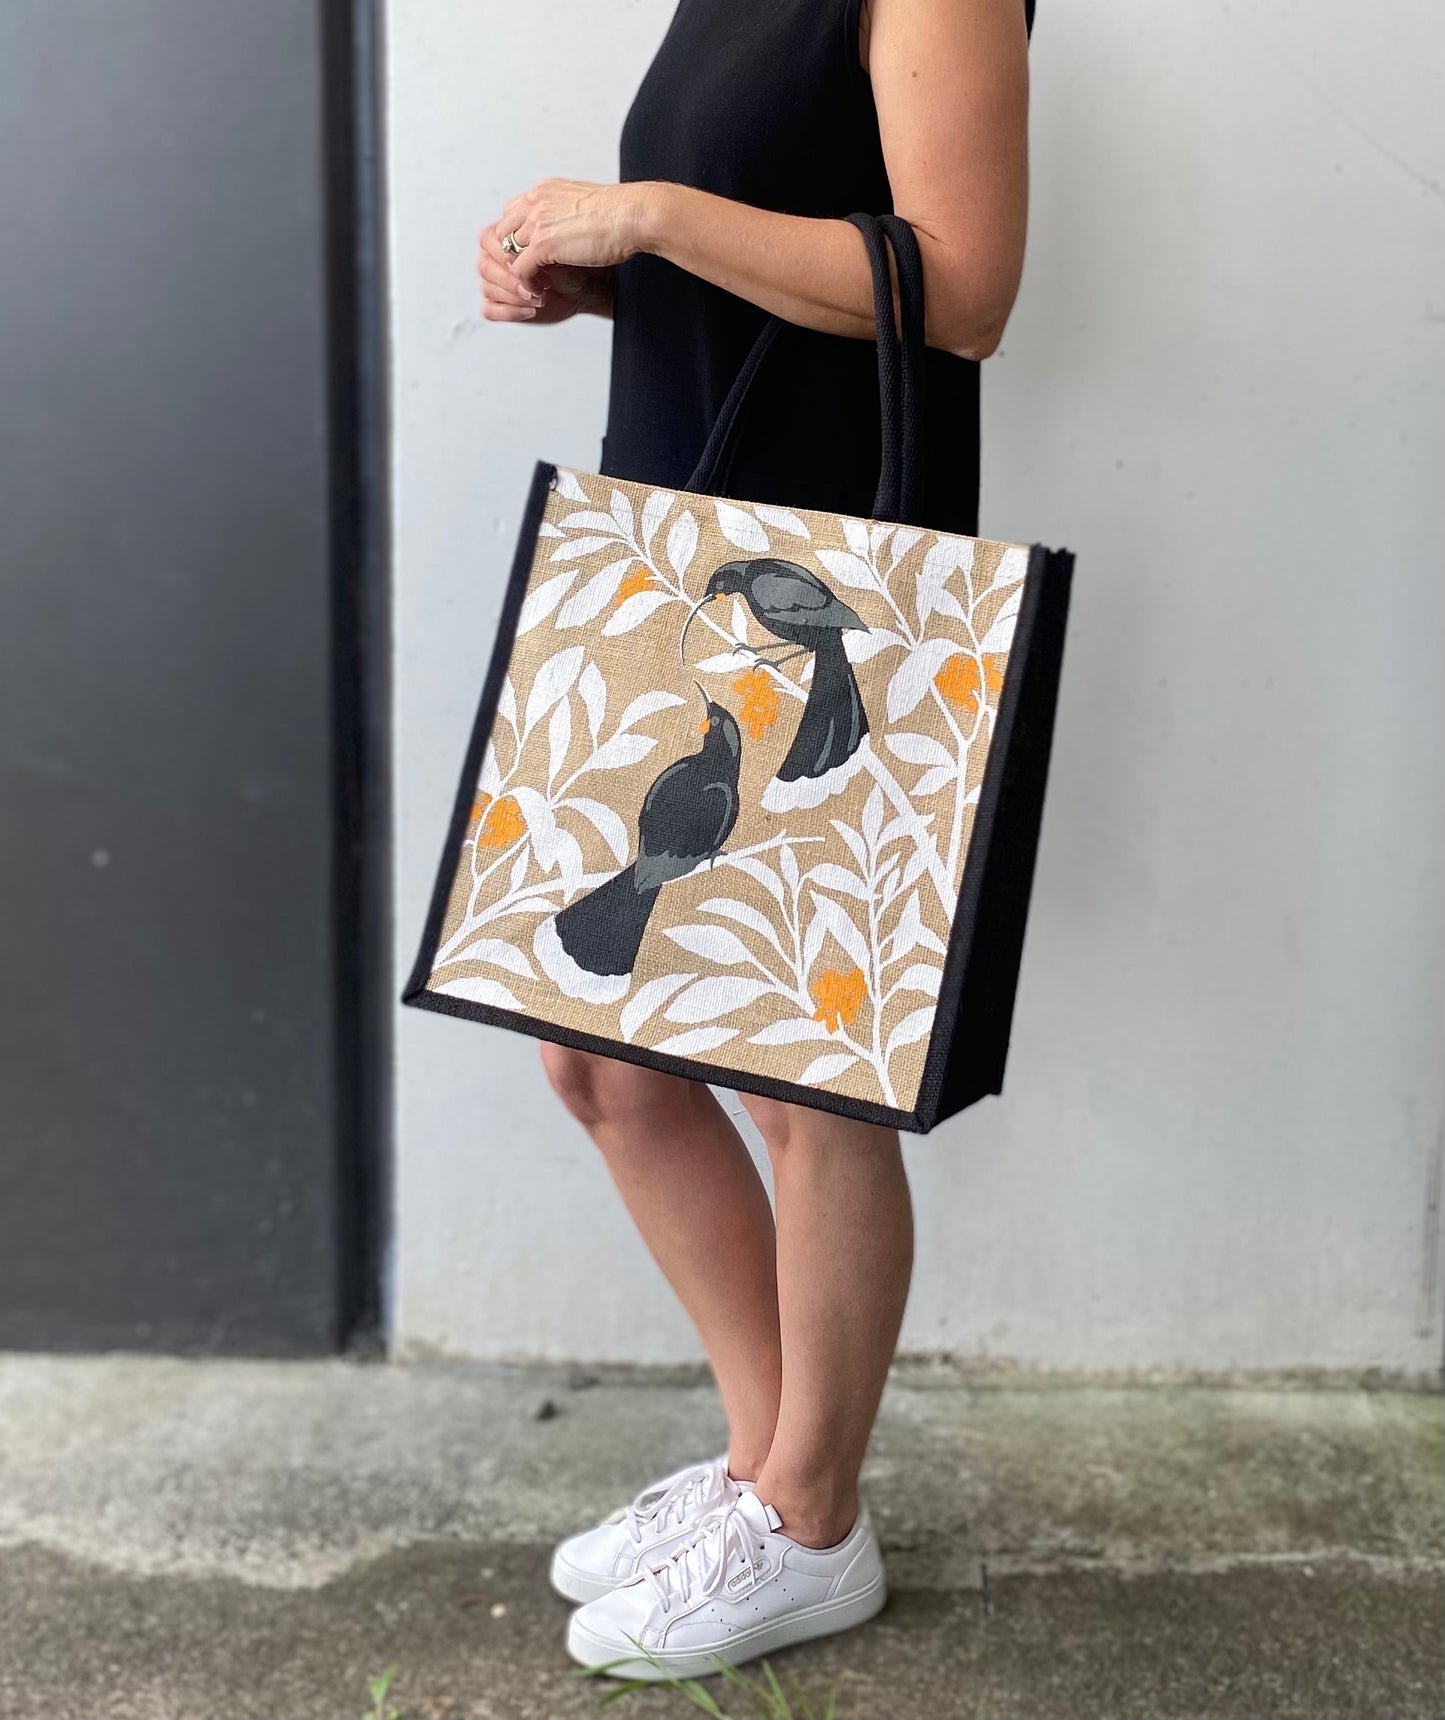 Huia print jute bag by Hansby Design , New Zealand artist